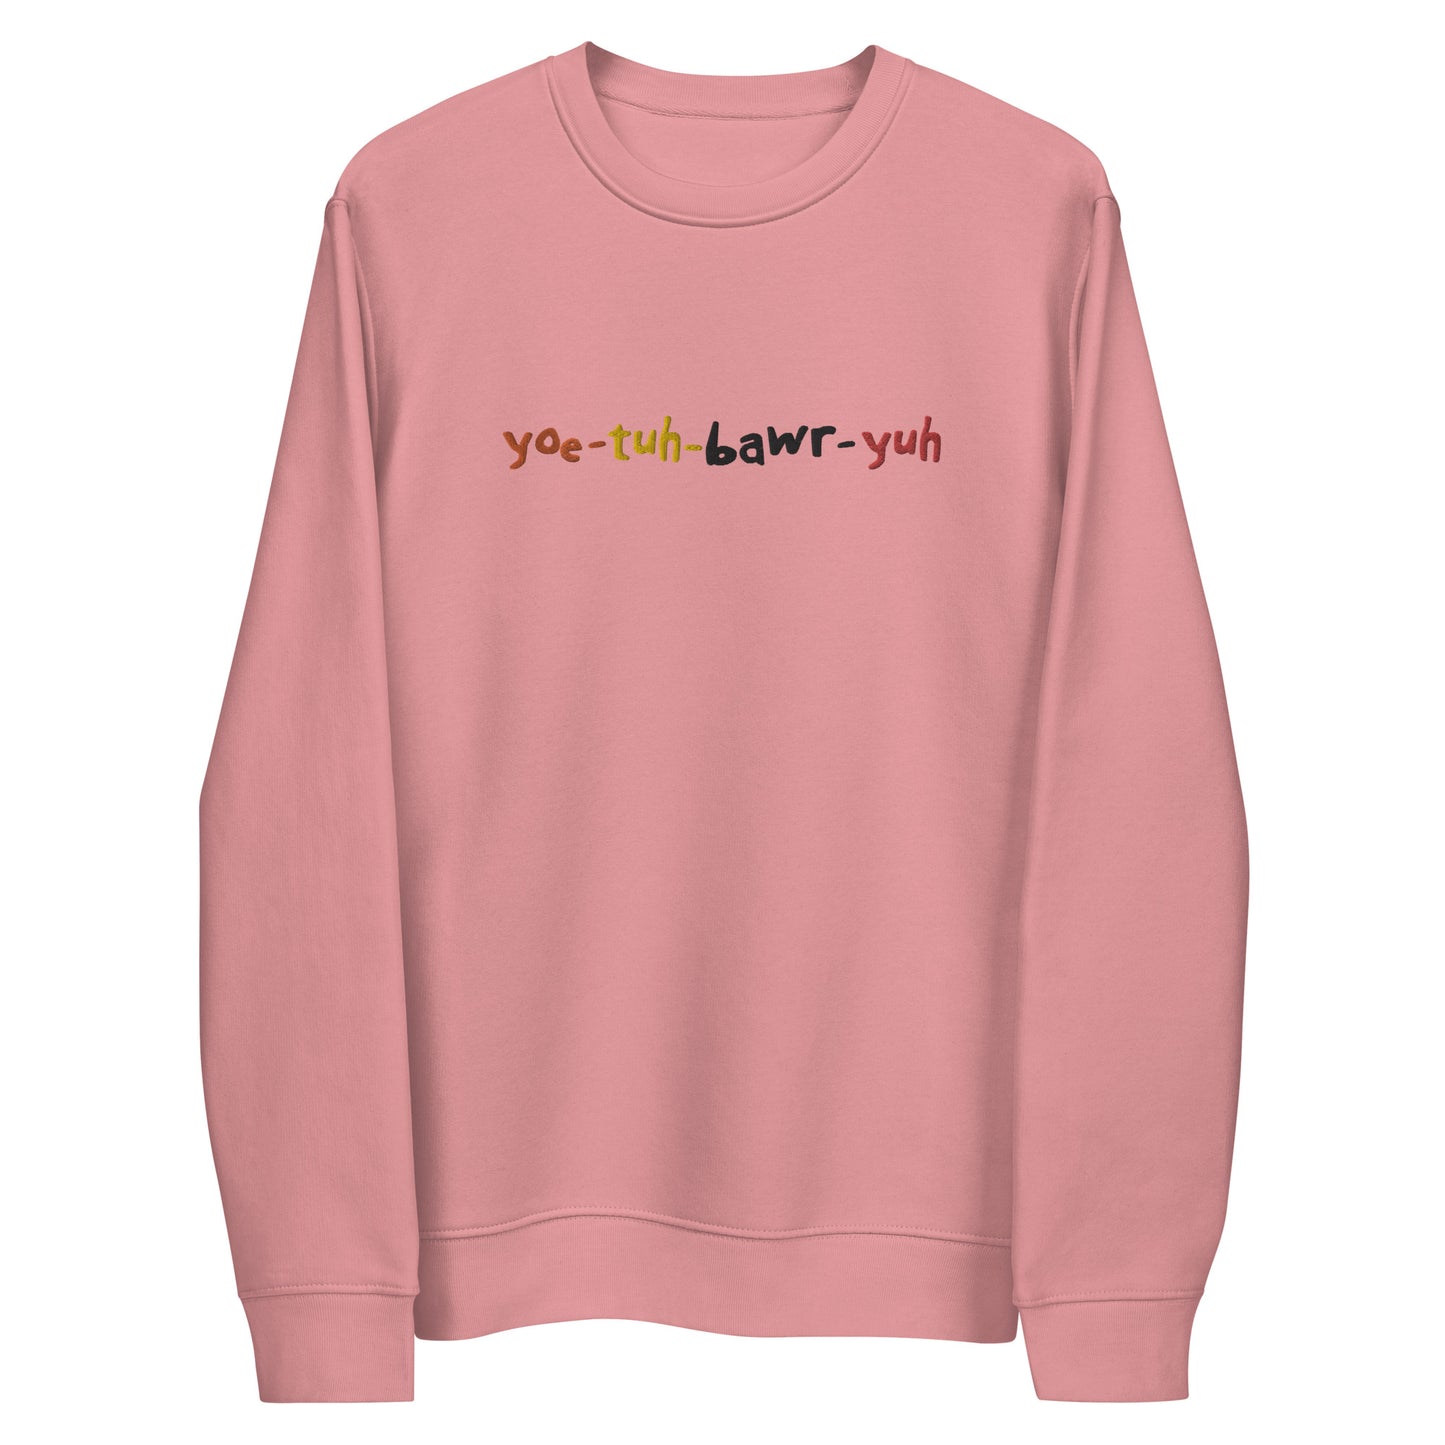 yœ-tuh-bawr-yuh - Embroidered Unisex eco sweatshirt